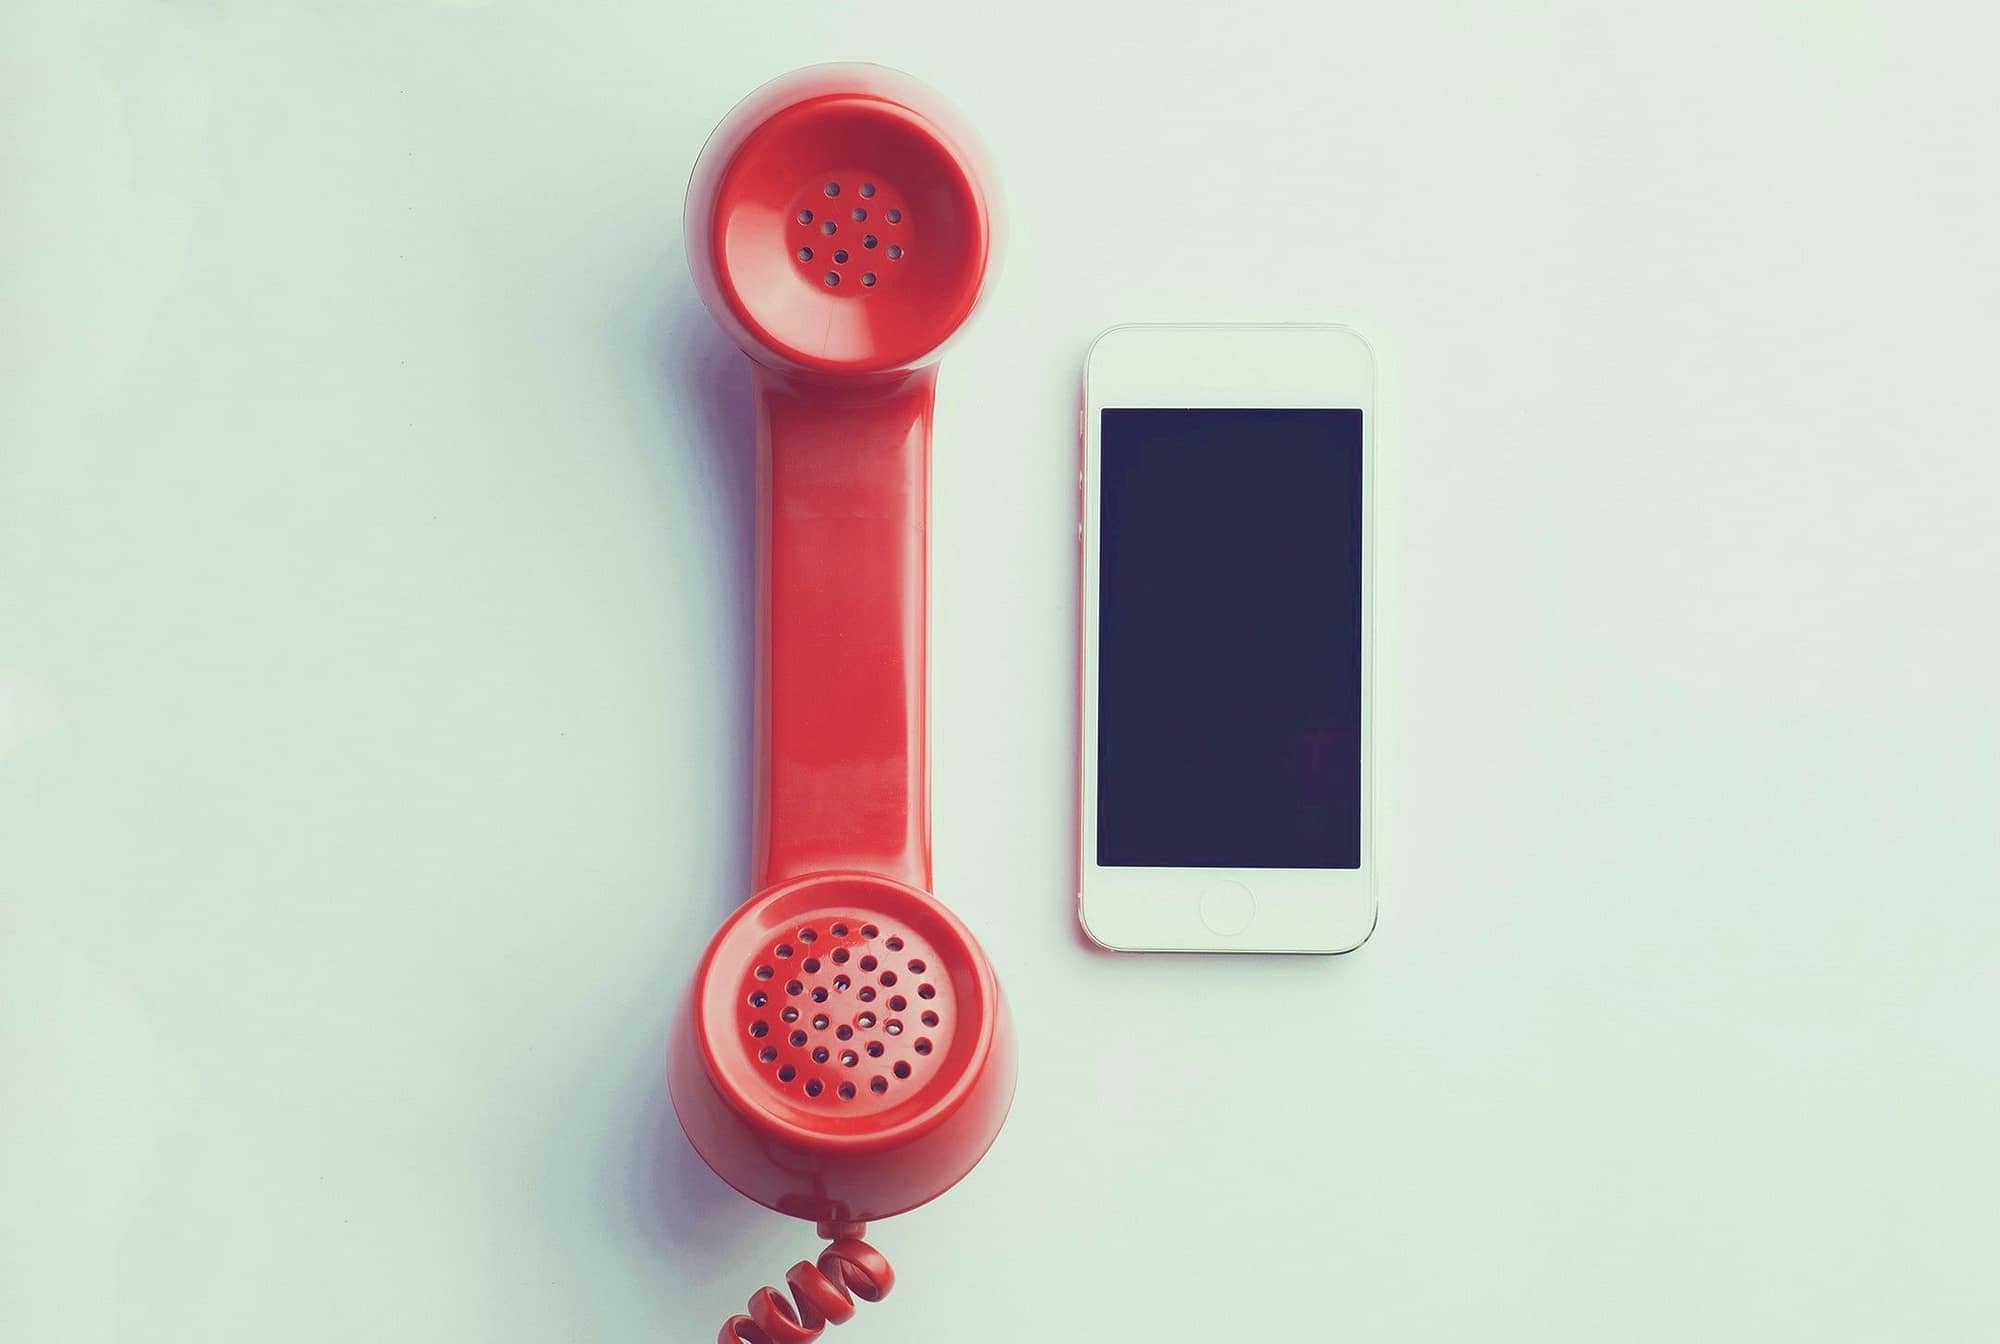 VoIP Voice over Internet Protocol vs landline phone technology